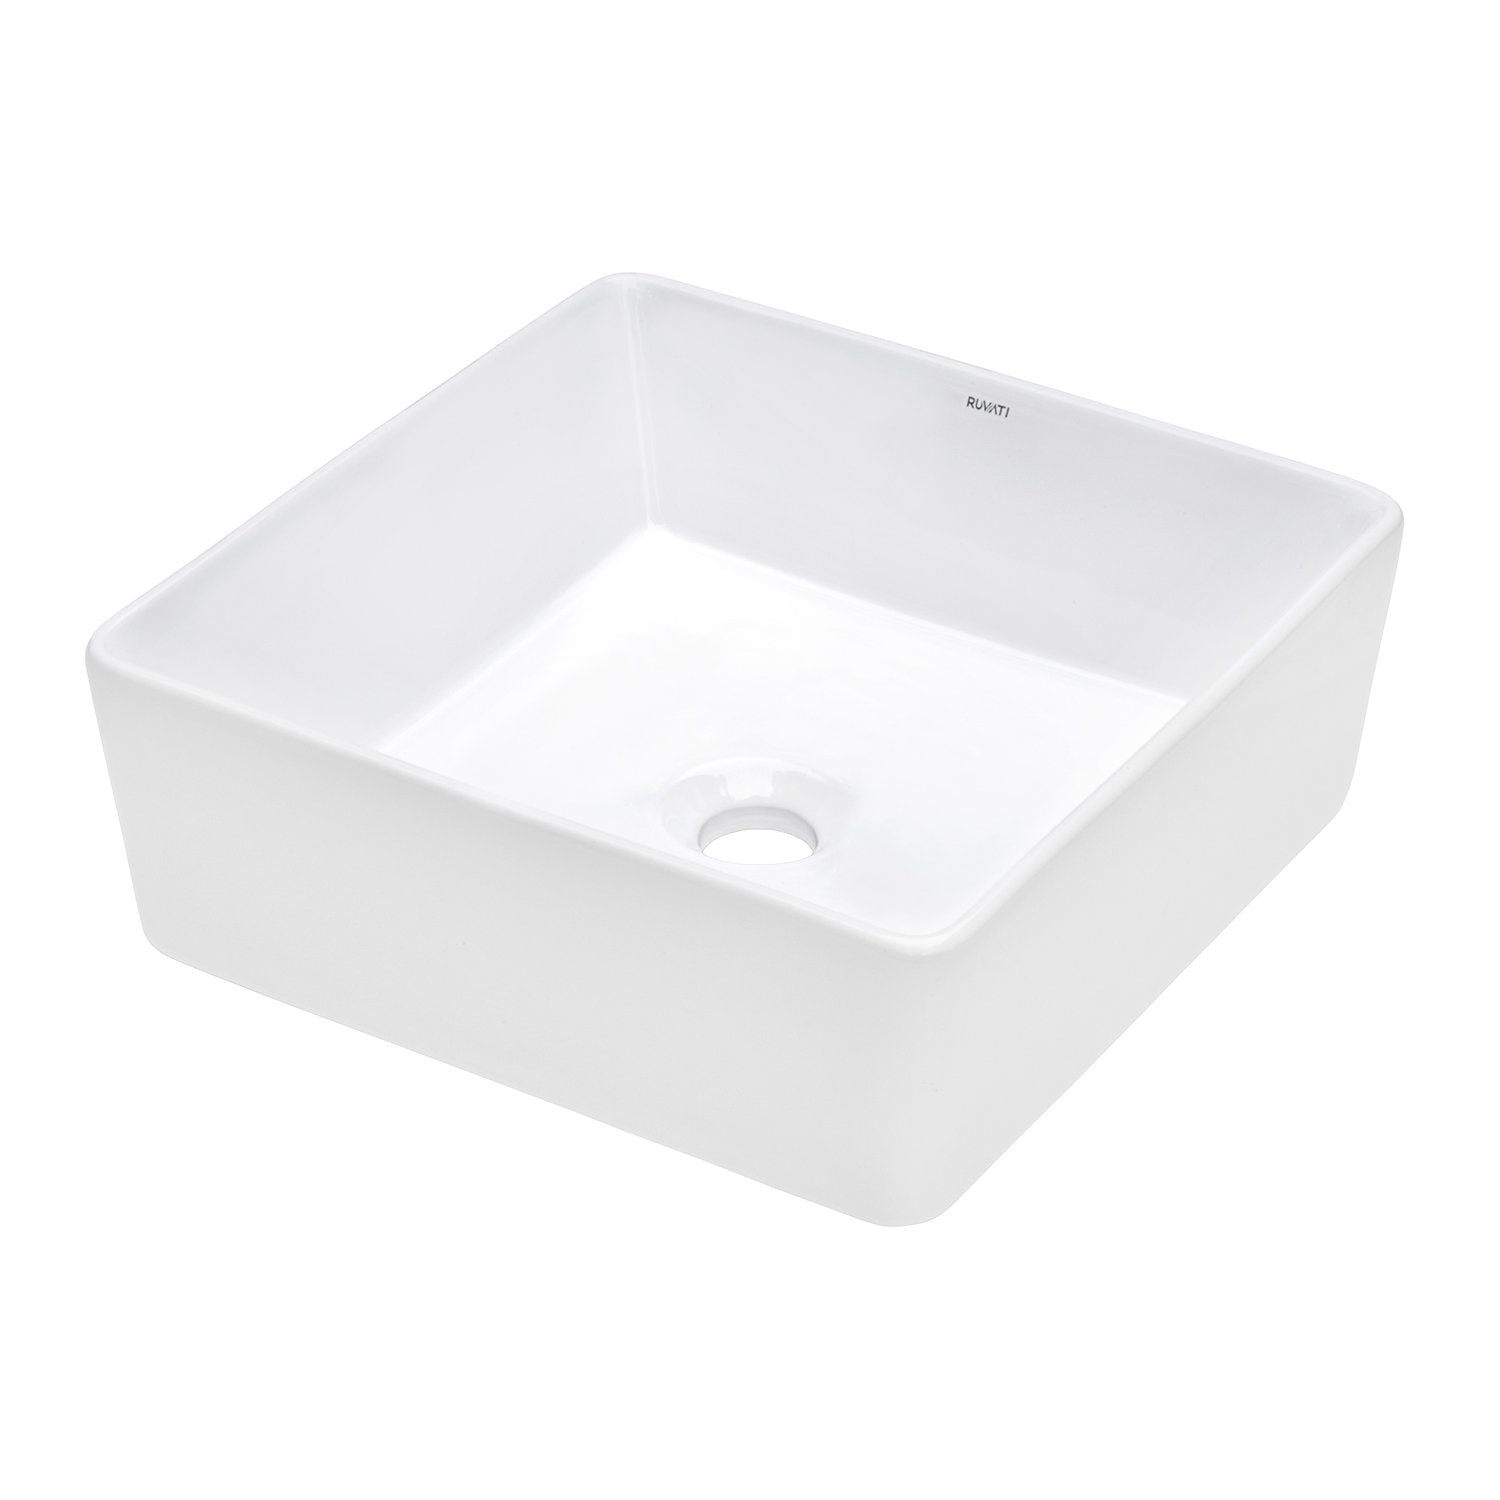 Ruvati 15" x 15" Square Bathroom Vessel Sink in White RVB1616